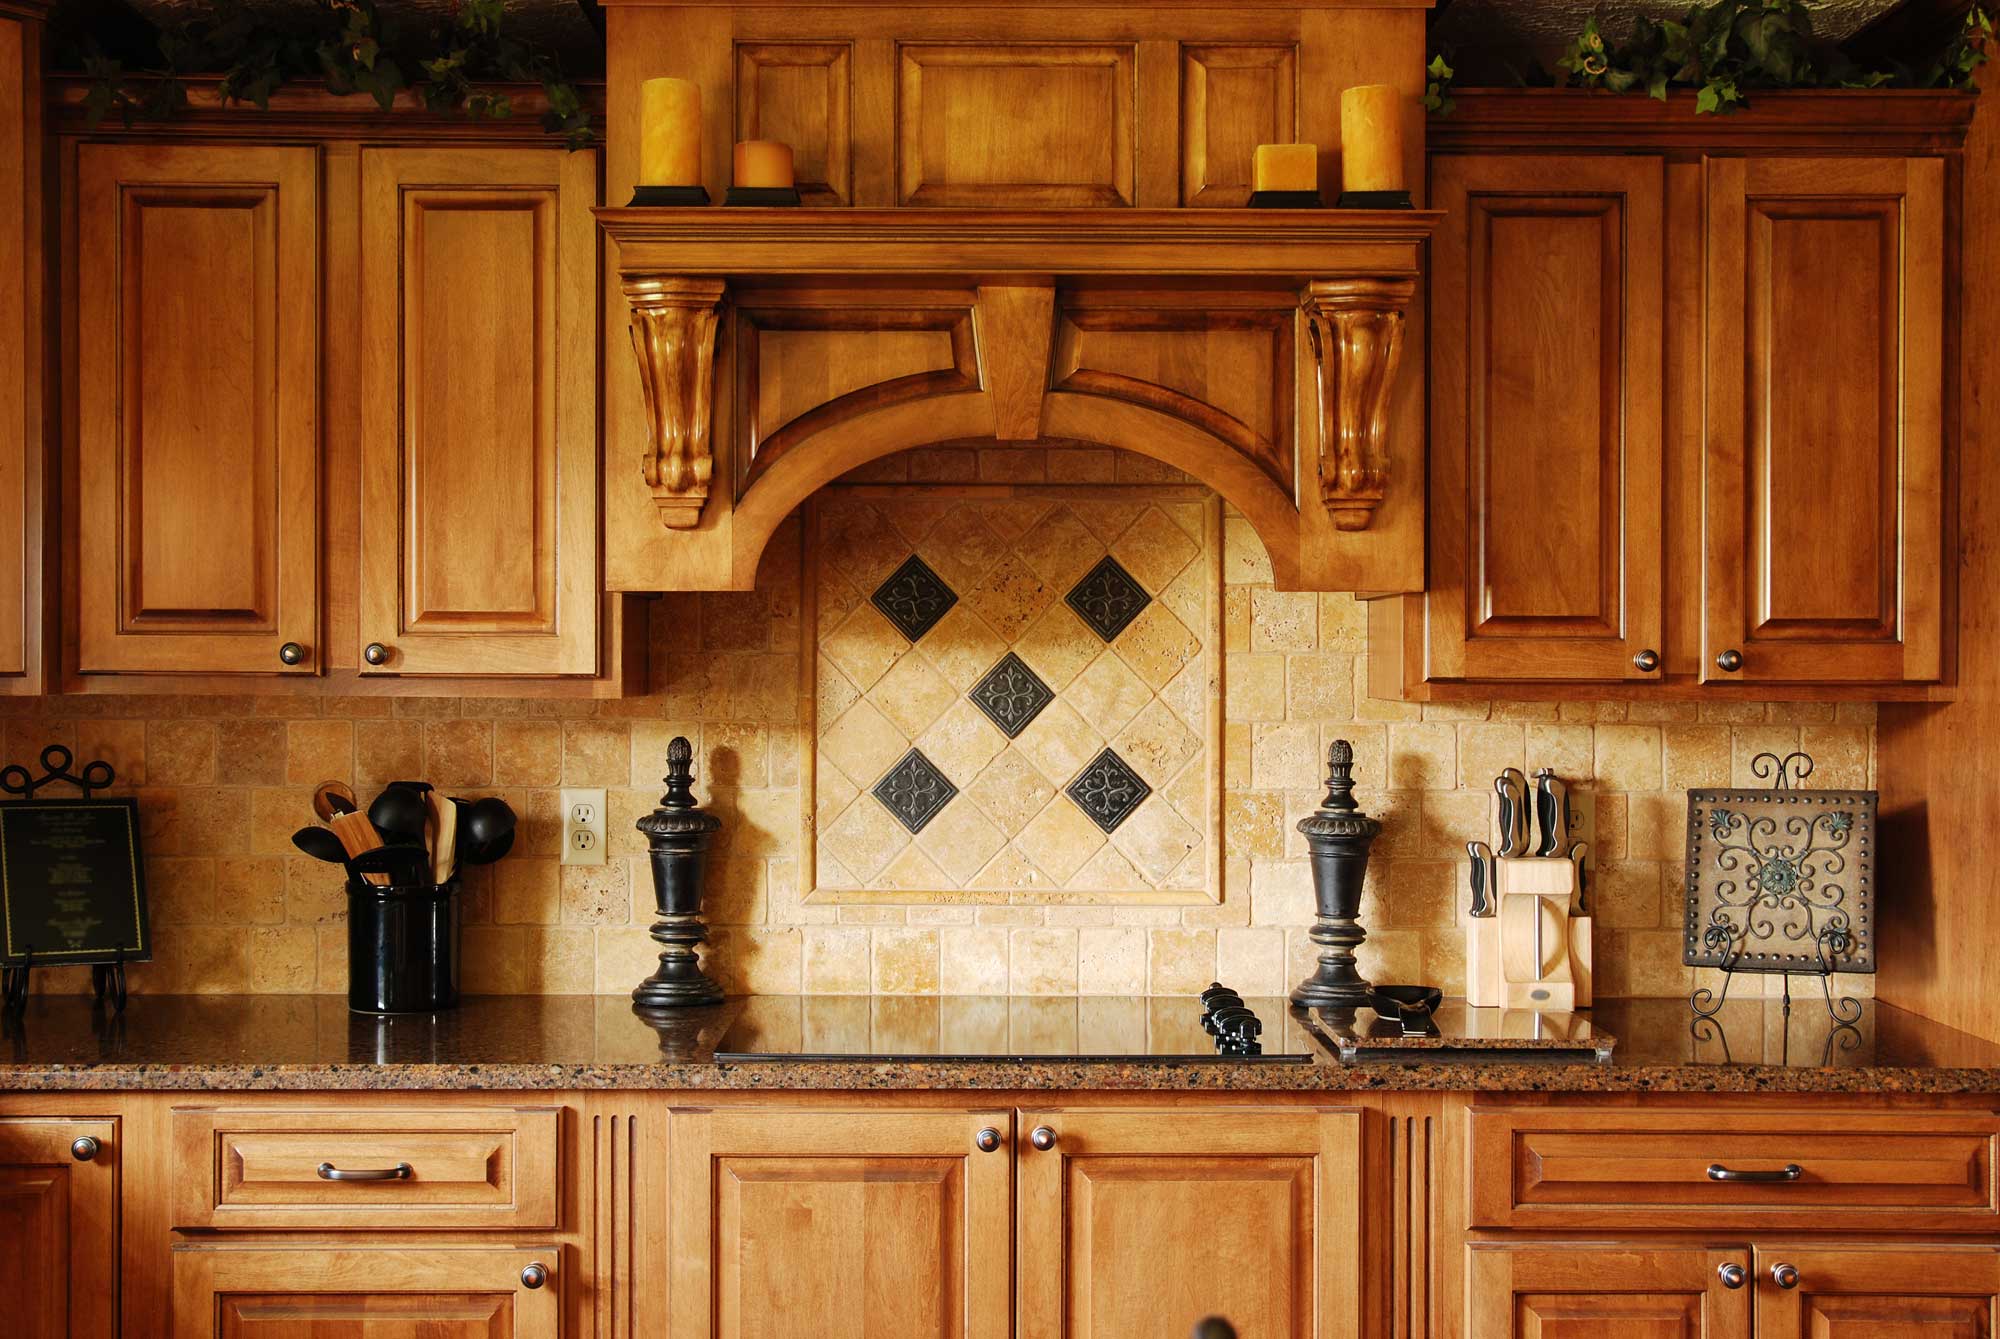 Custom kitchen with wood cabinets and tile backsplash